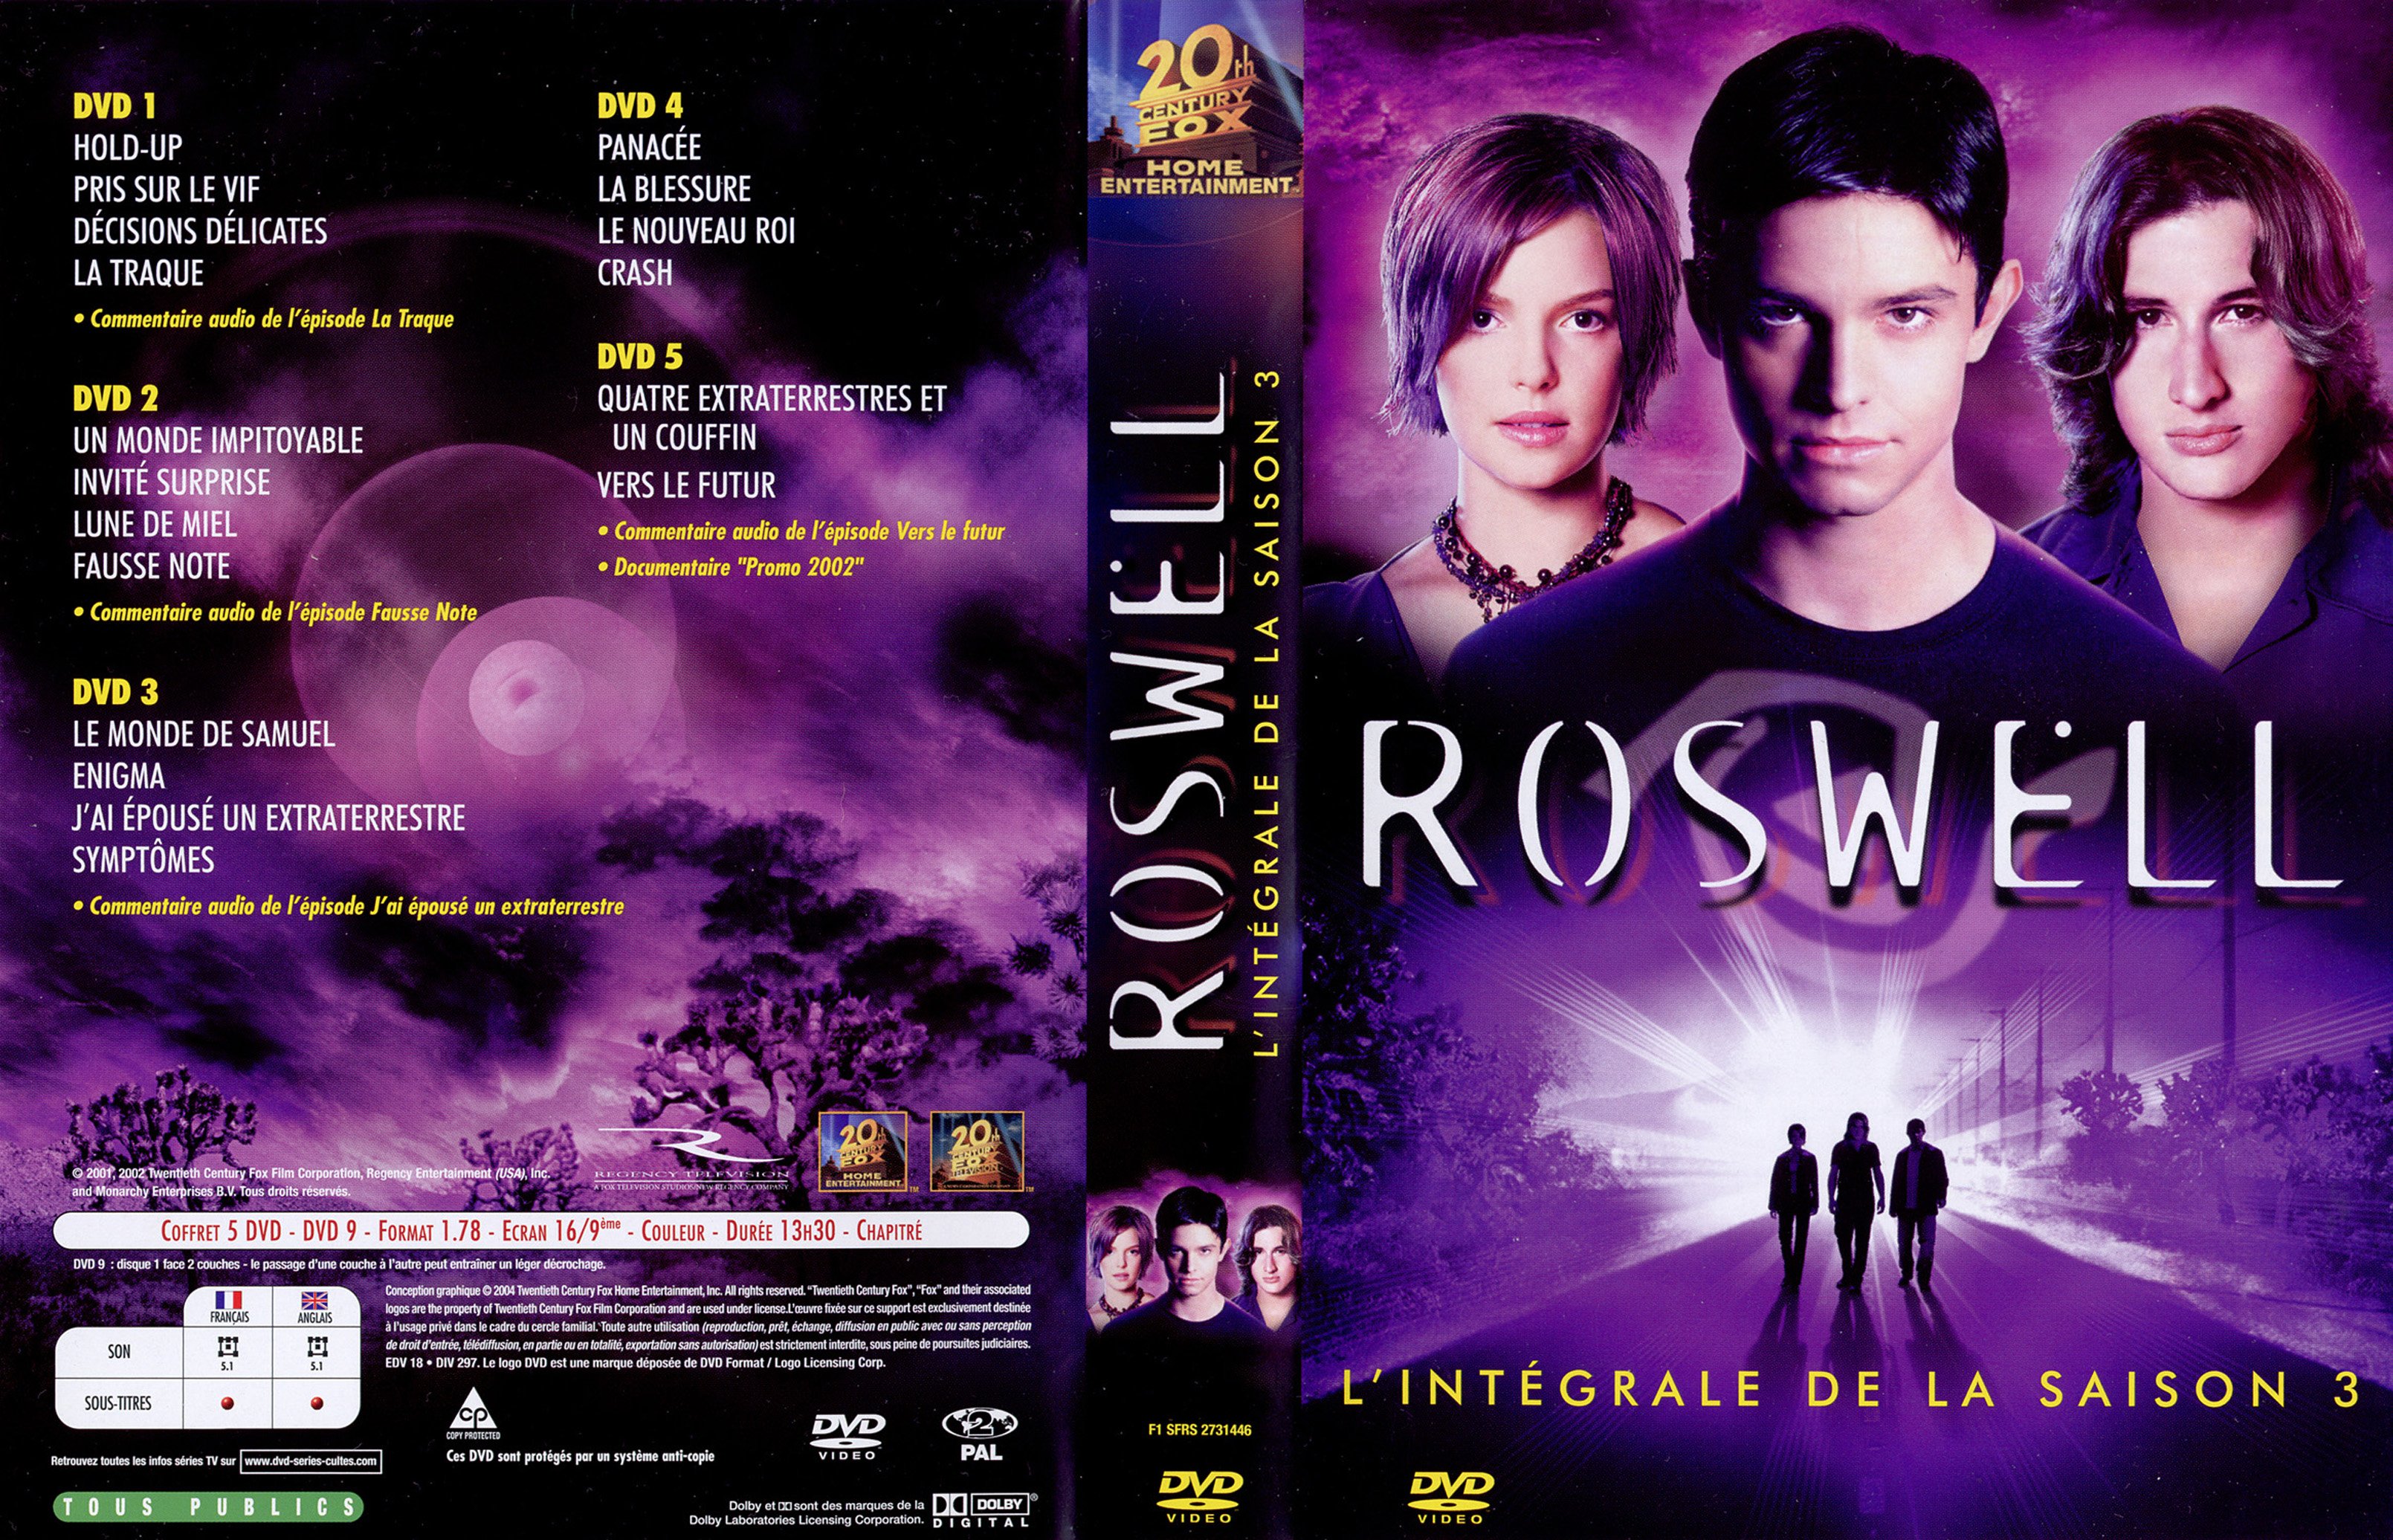 Jaquette DVD Roswell saison 3 COFFRET